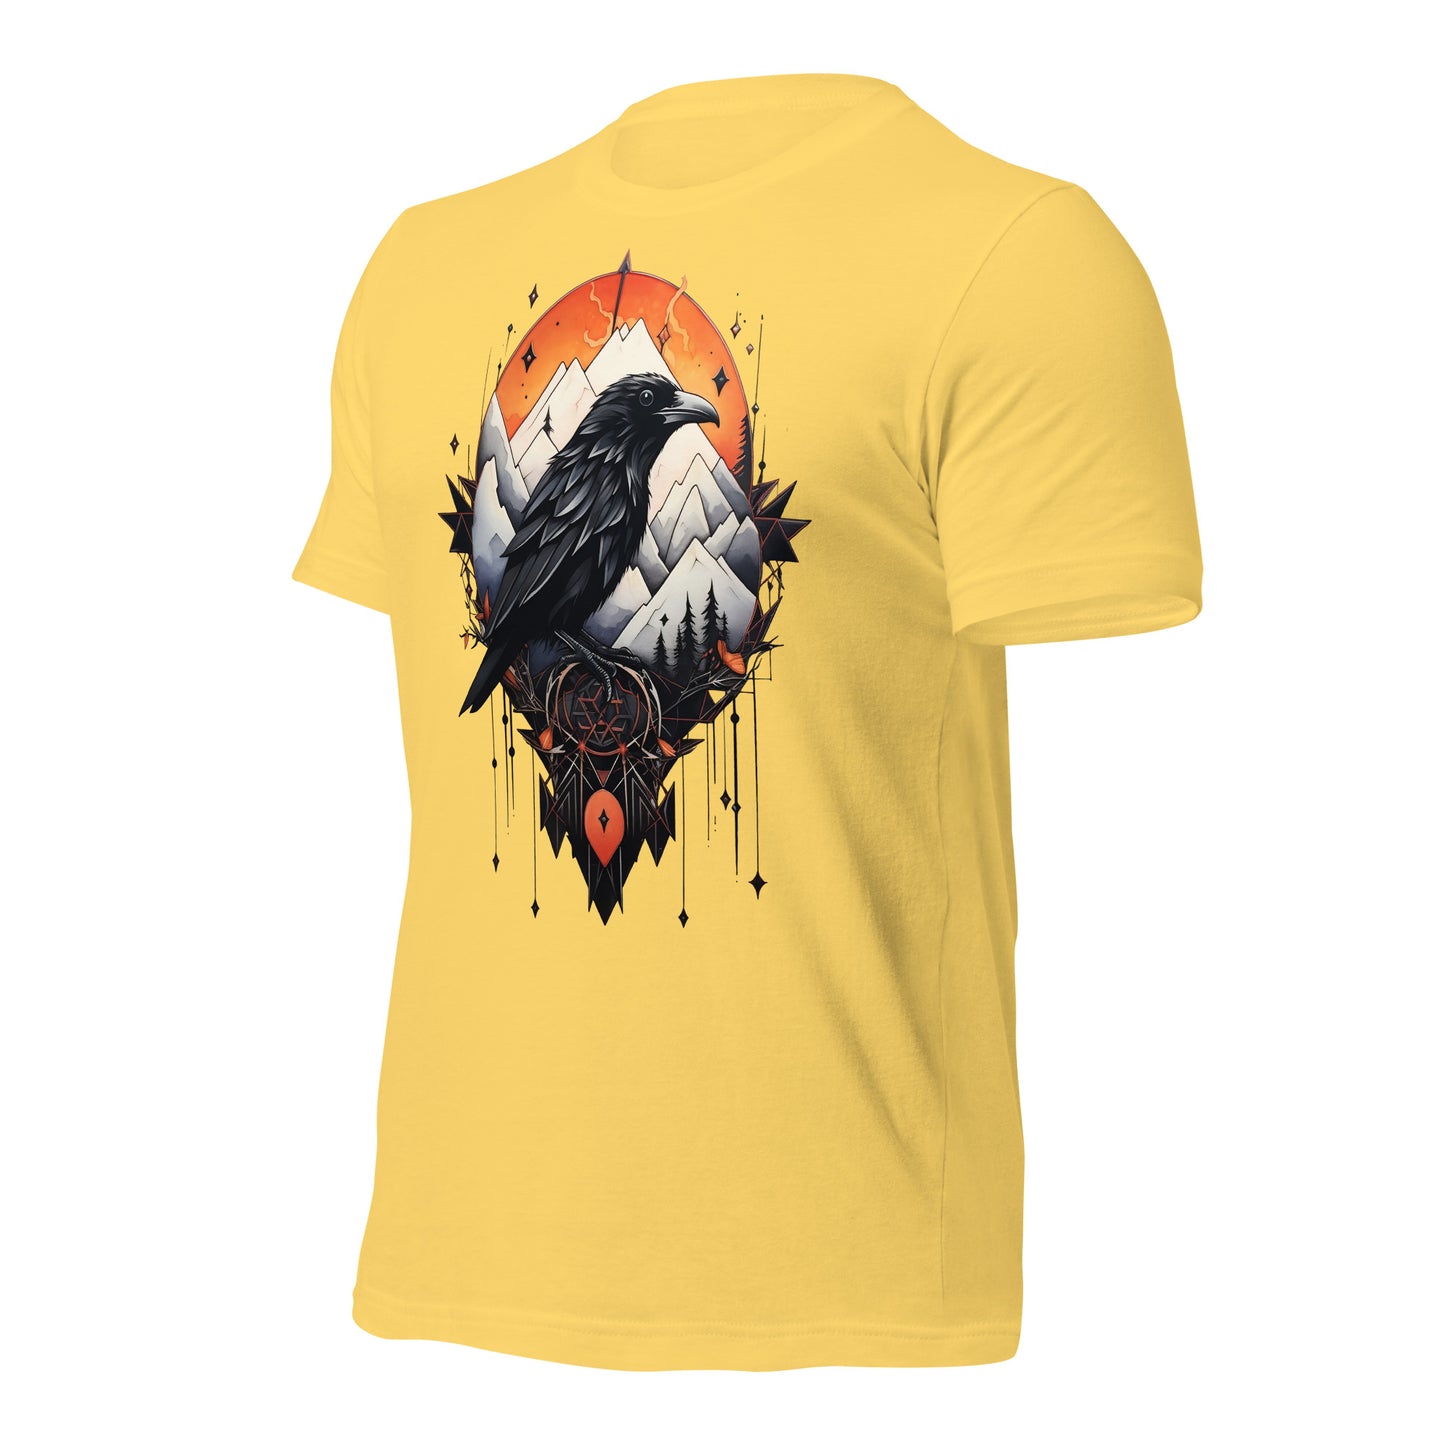 Crow t-shirt